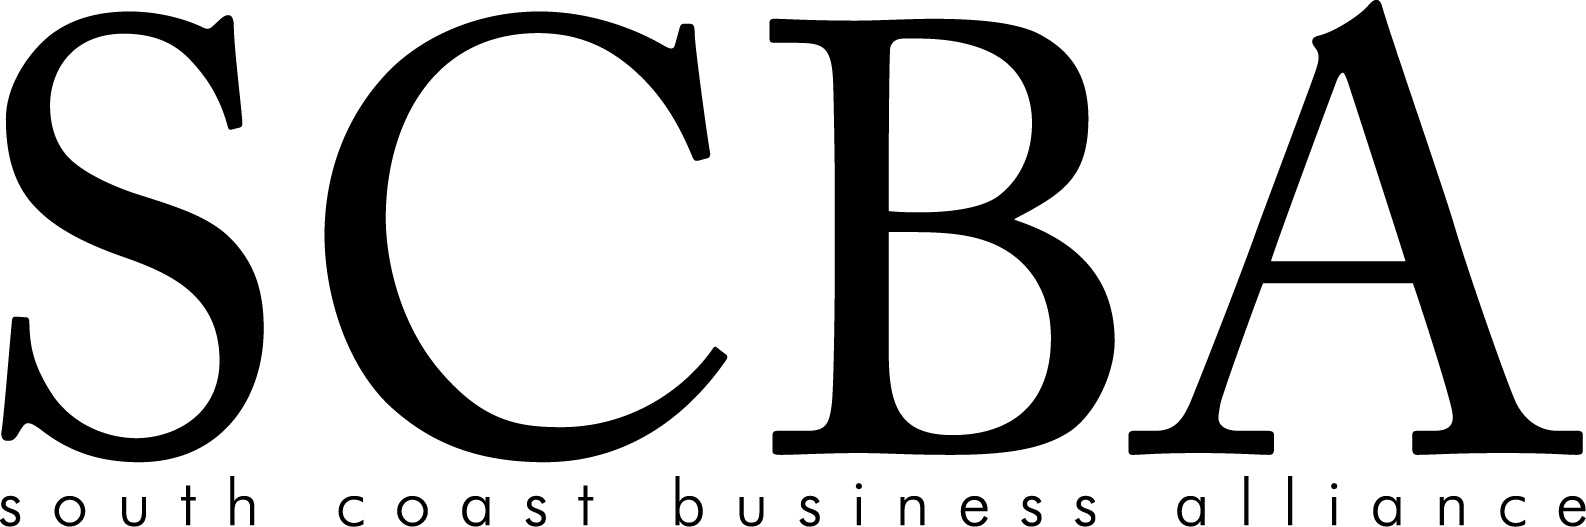 SCBA Logo - About the SCBA Coast Business Alliance (SCBA)